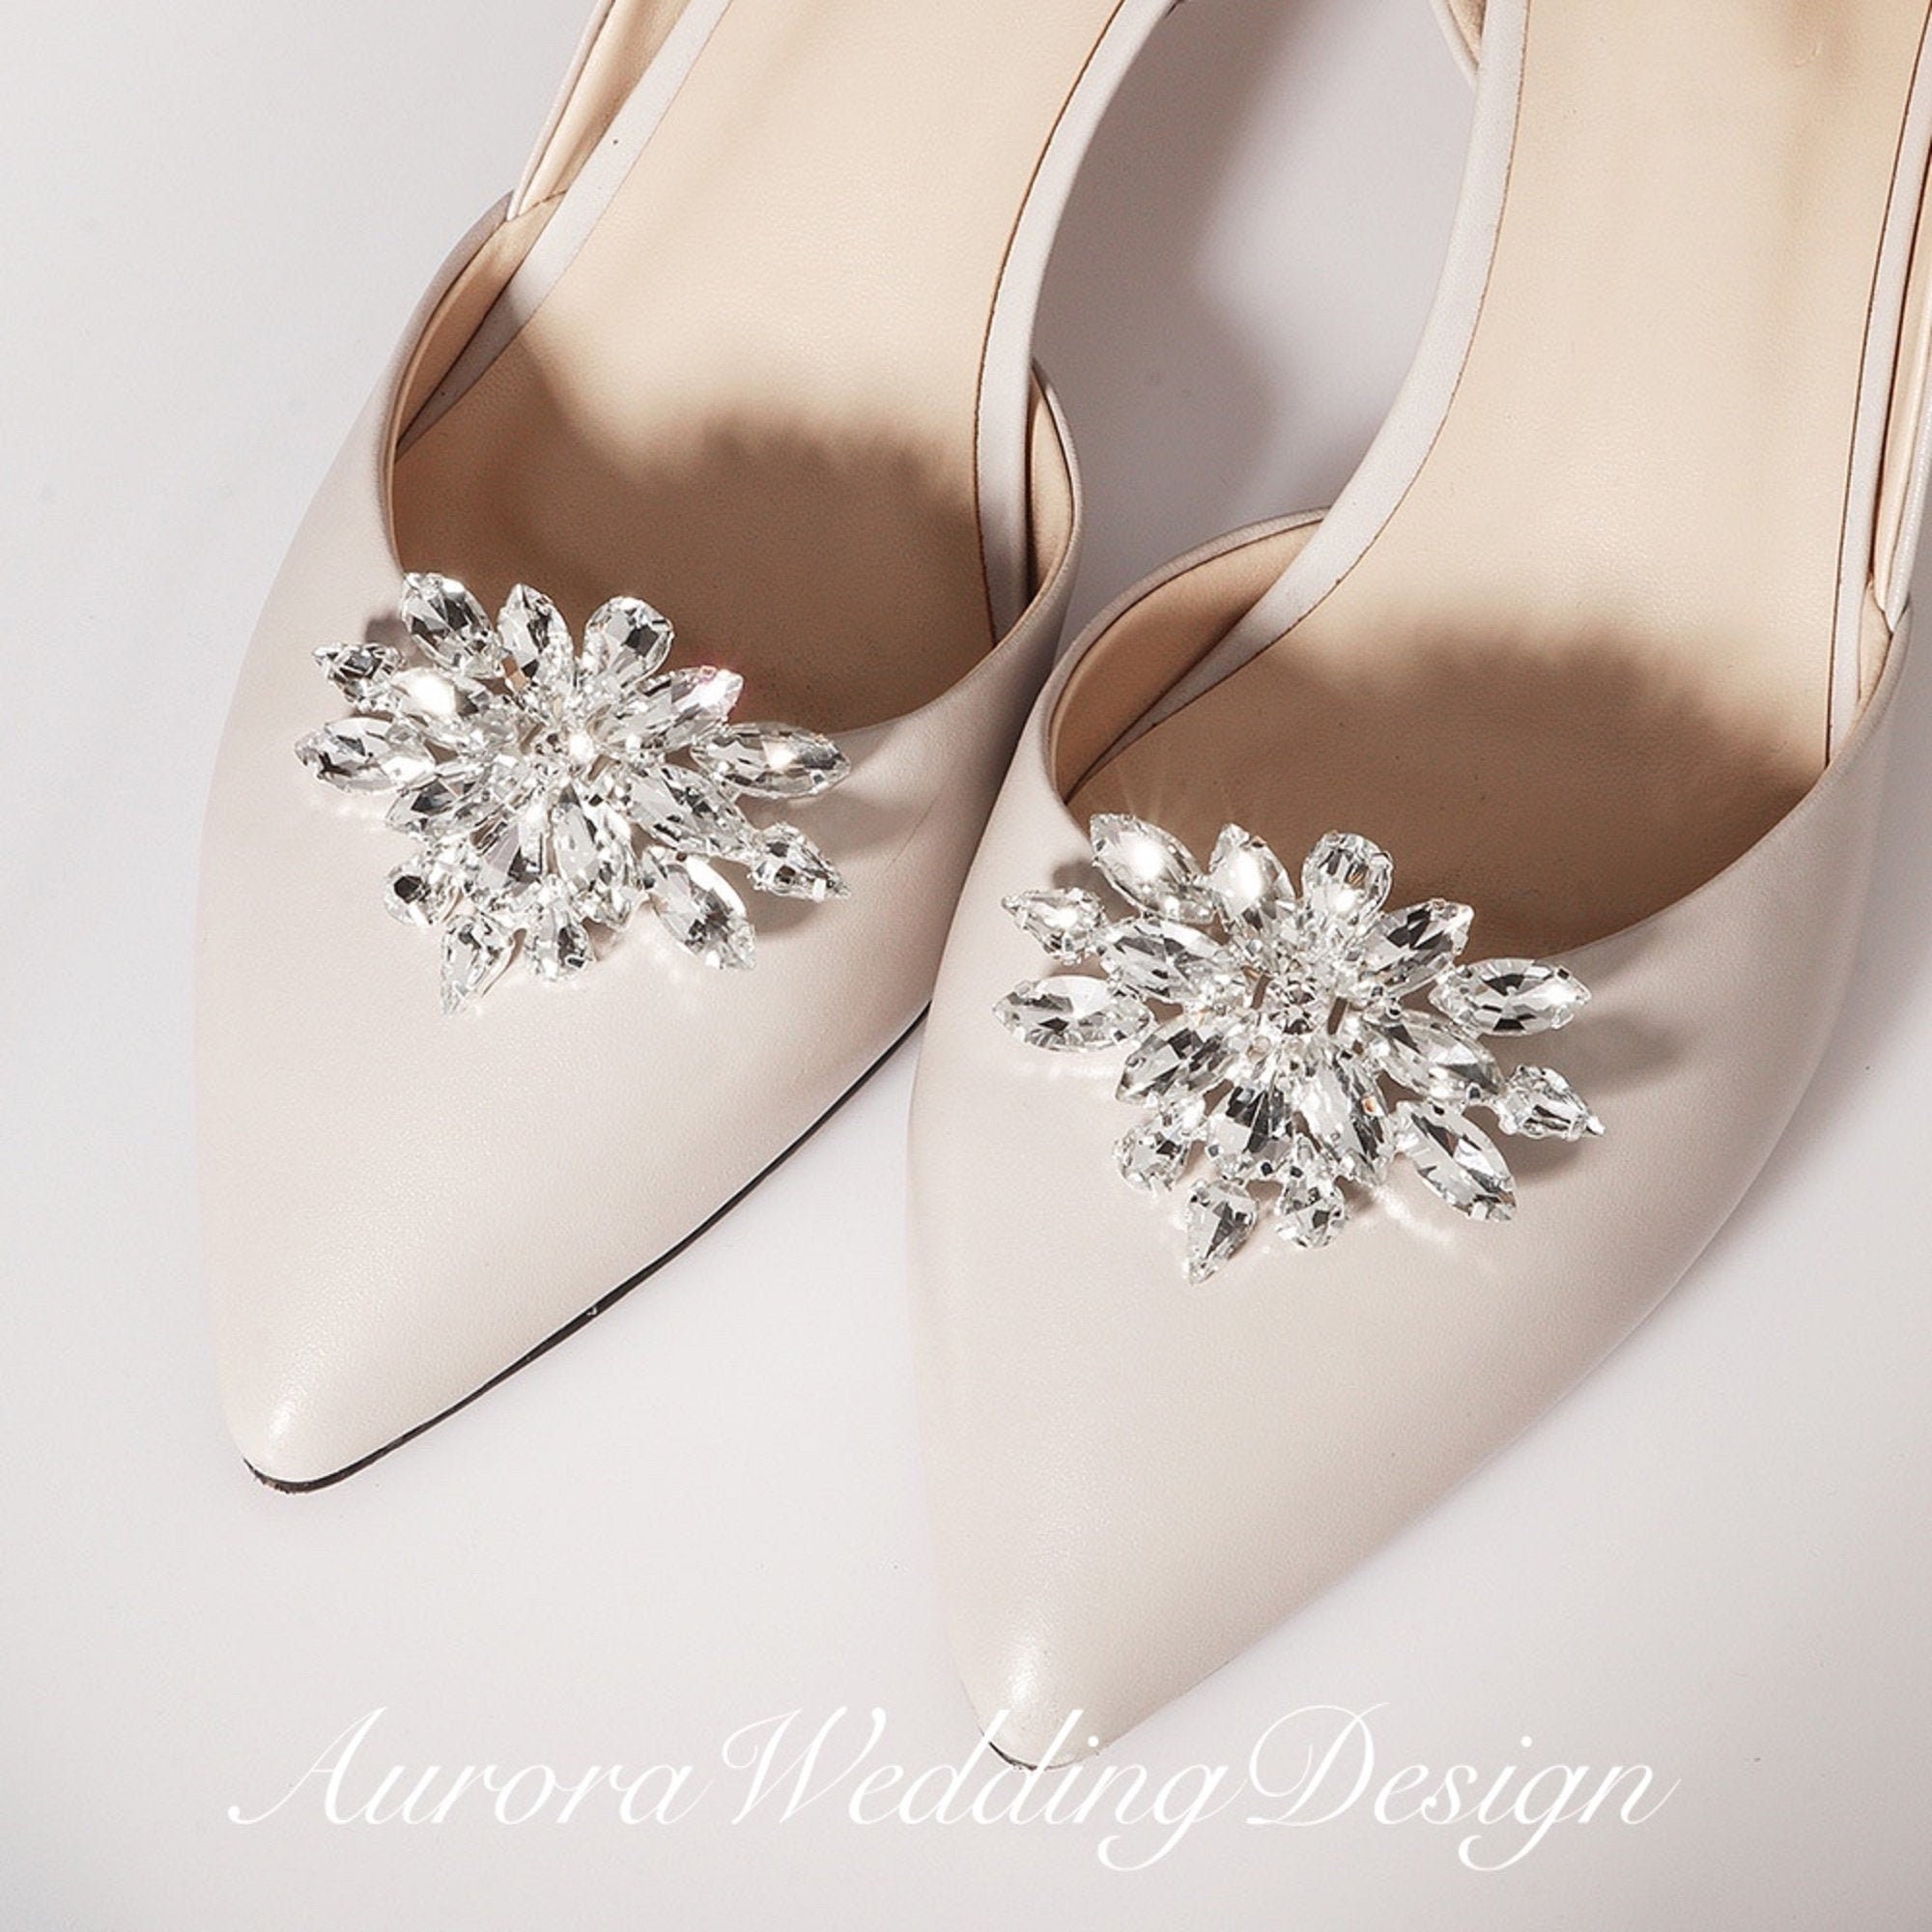 Simdoc 2 Pcs Shoe Clips Buckles,Floral Shoe Decoration Crystal Luxury Women Clothes Charms DIY High Heels Sandals Pumps 